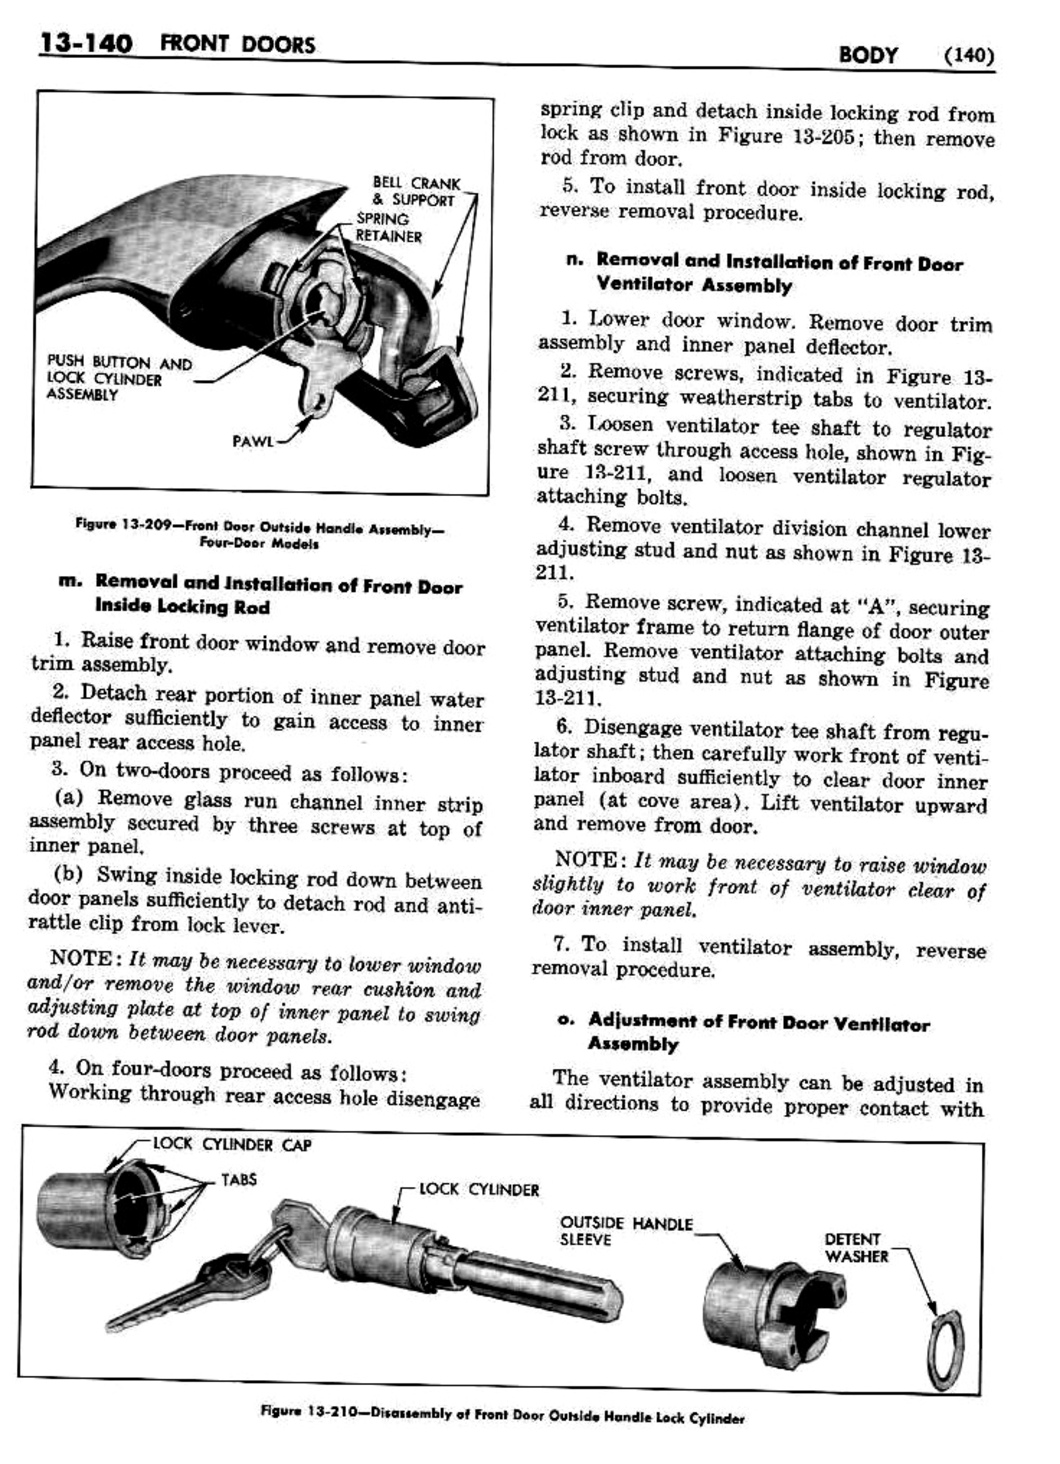 n_1958 Buick Body Service Manual-141-141.jpg